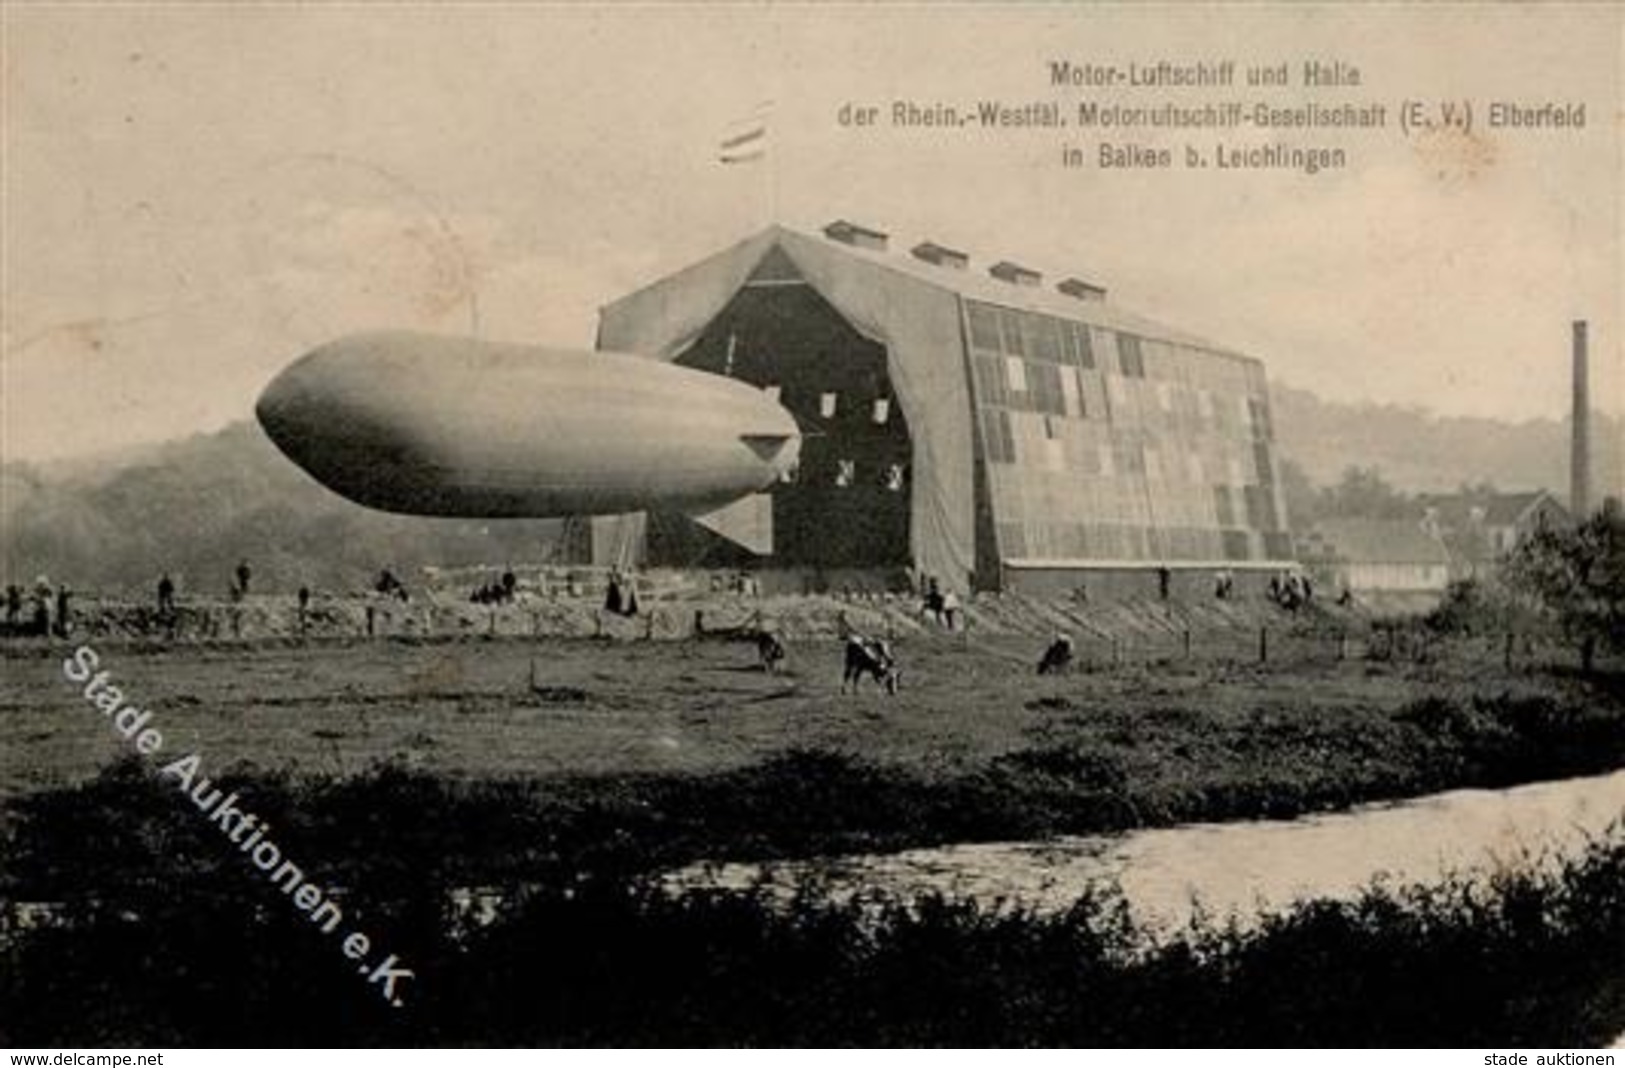 Zeppelin Leichlingen (5653) Motor Luftschiff Und Halle Elberfeld In Balken 1912 I-II Dirigeable - Zeppeline